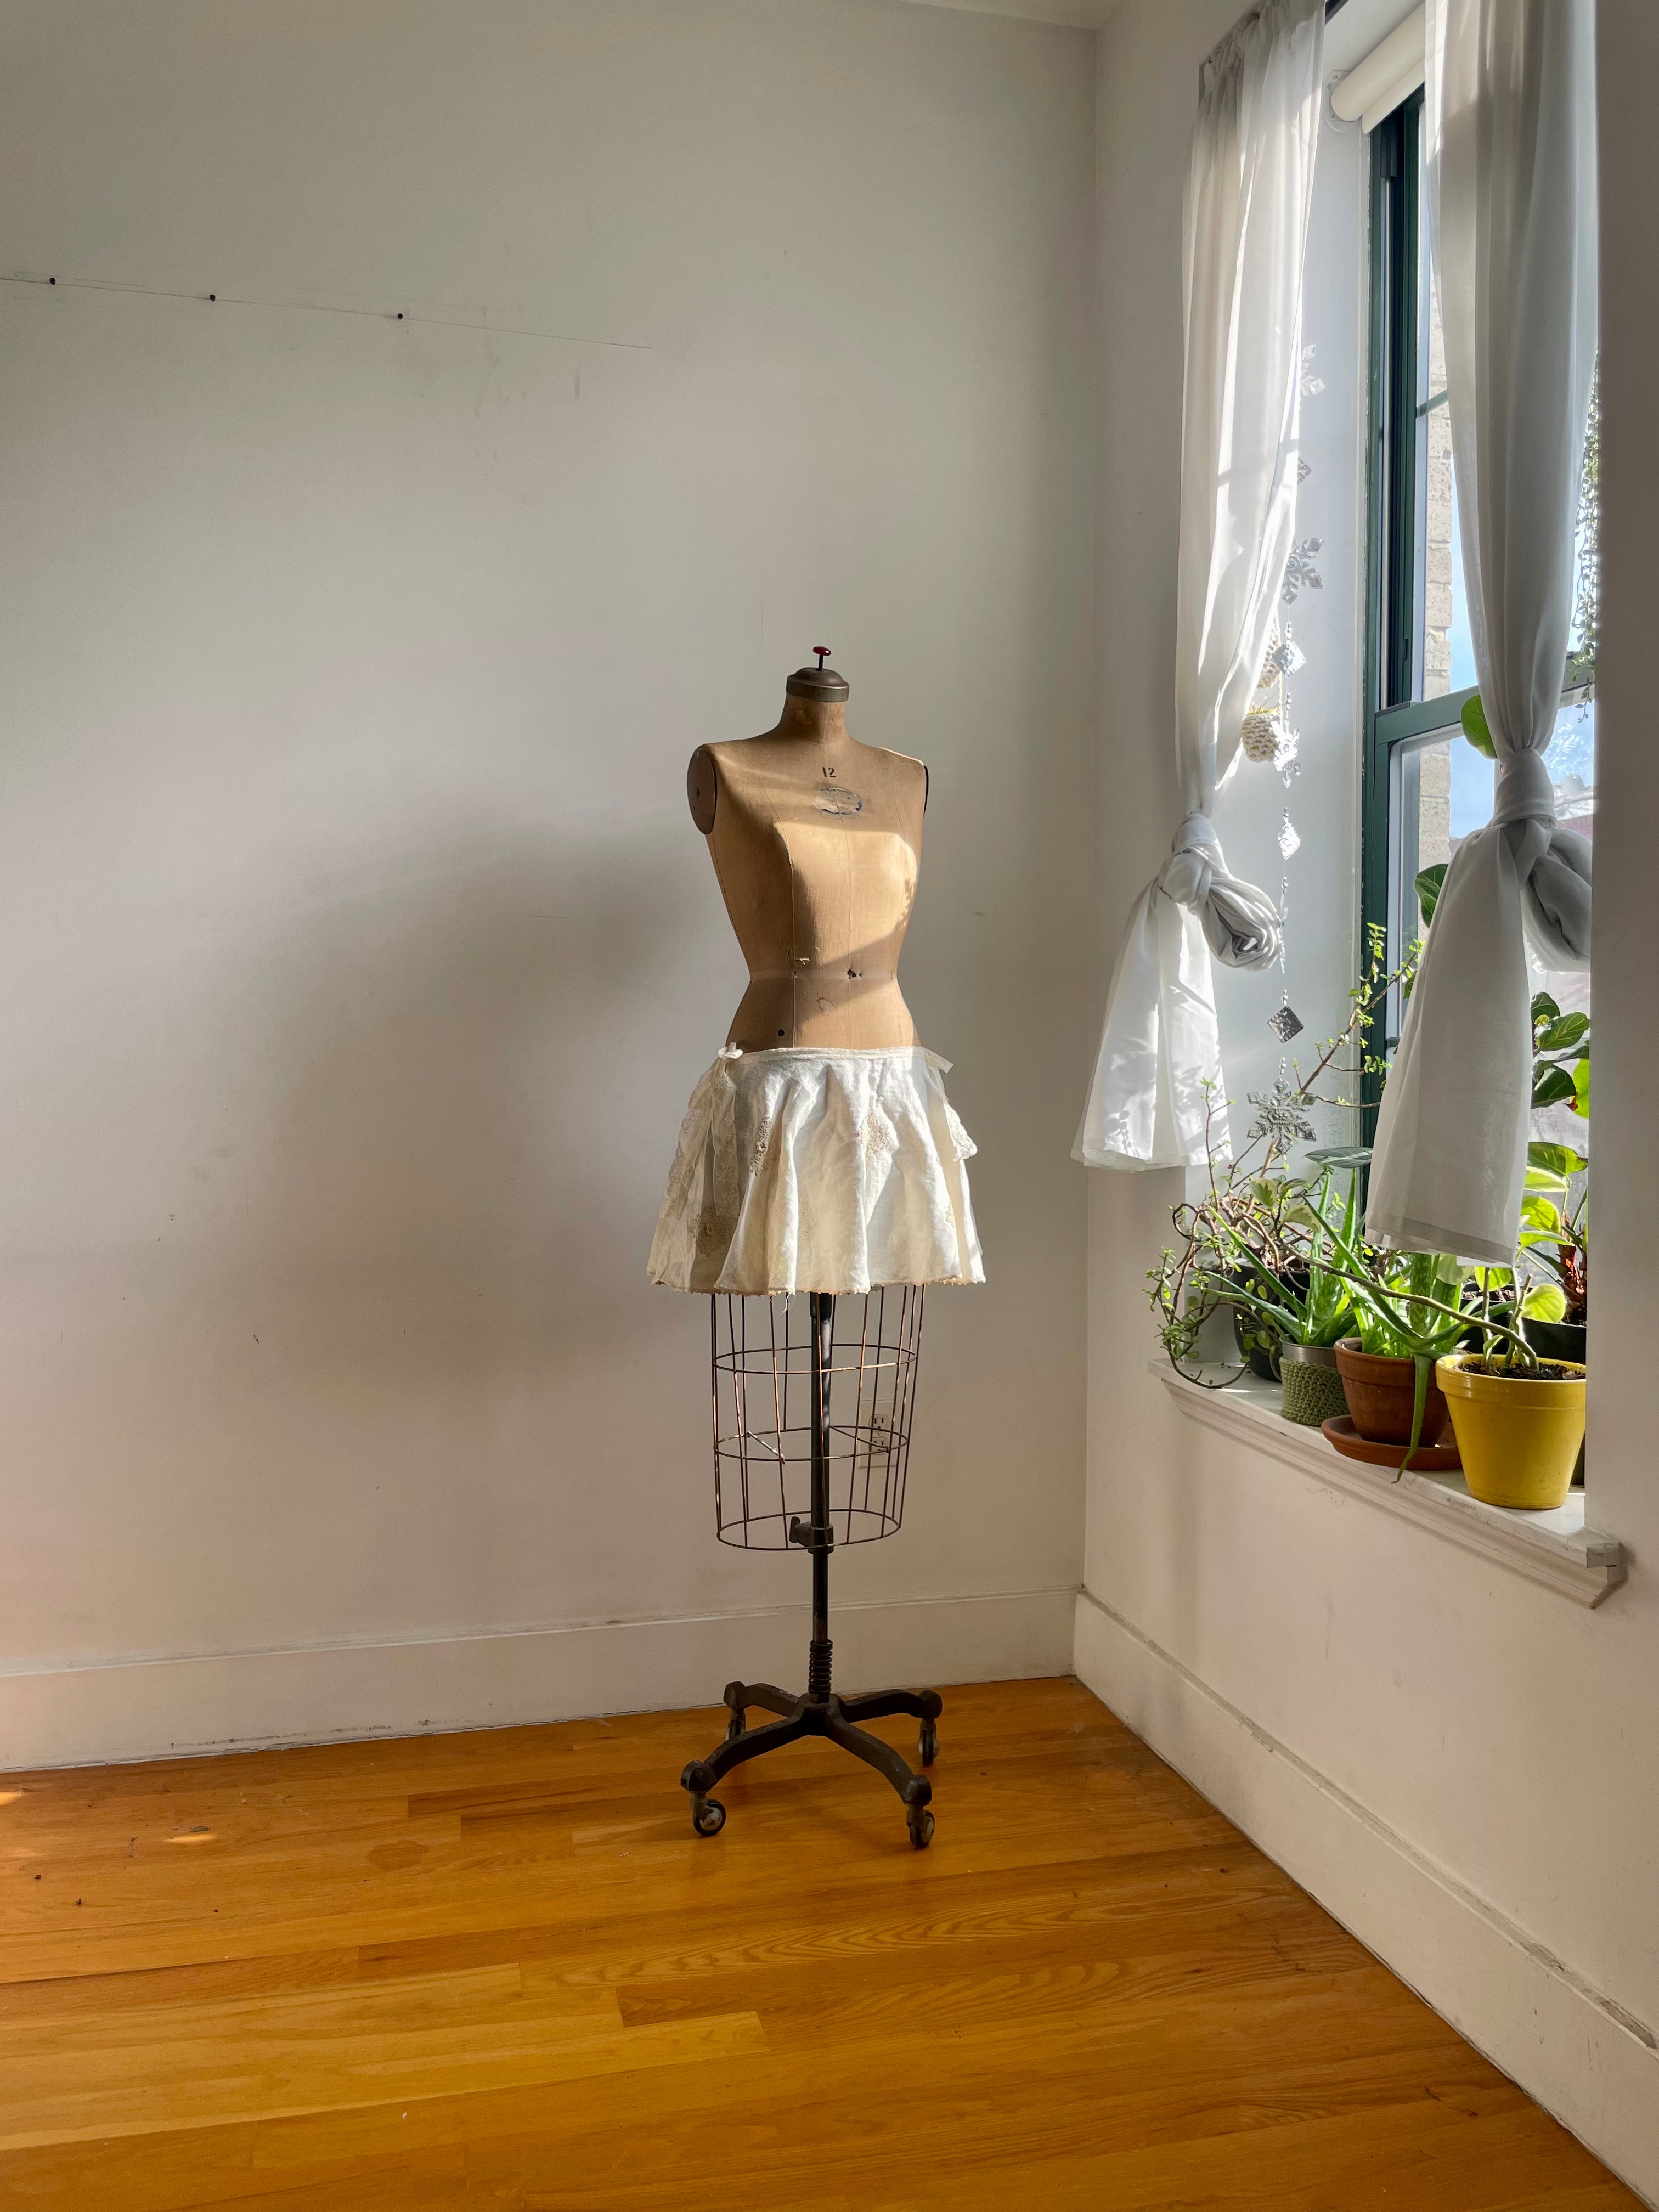 Corrine Mini Skirt